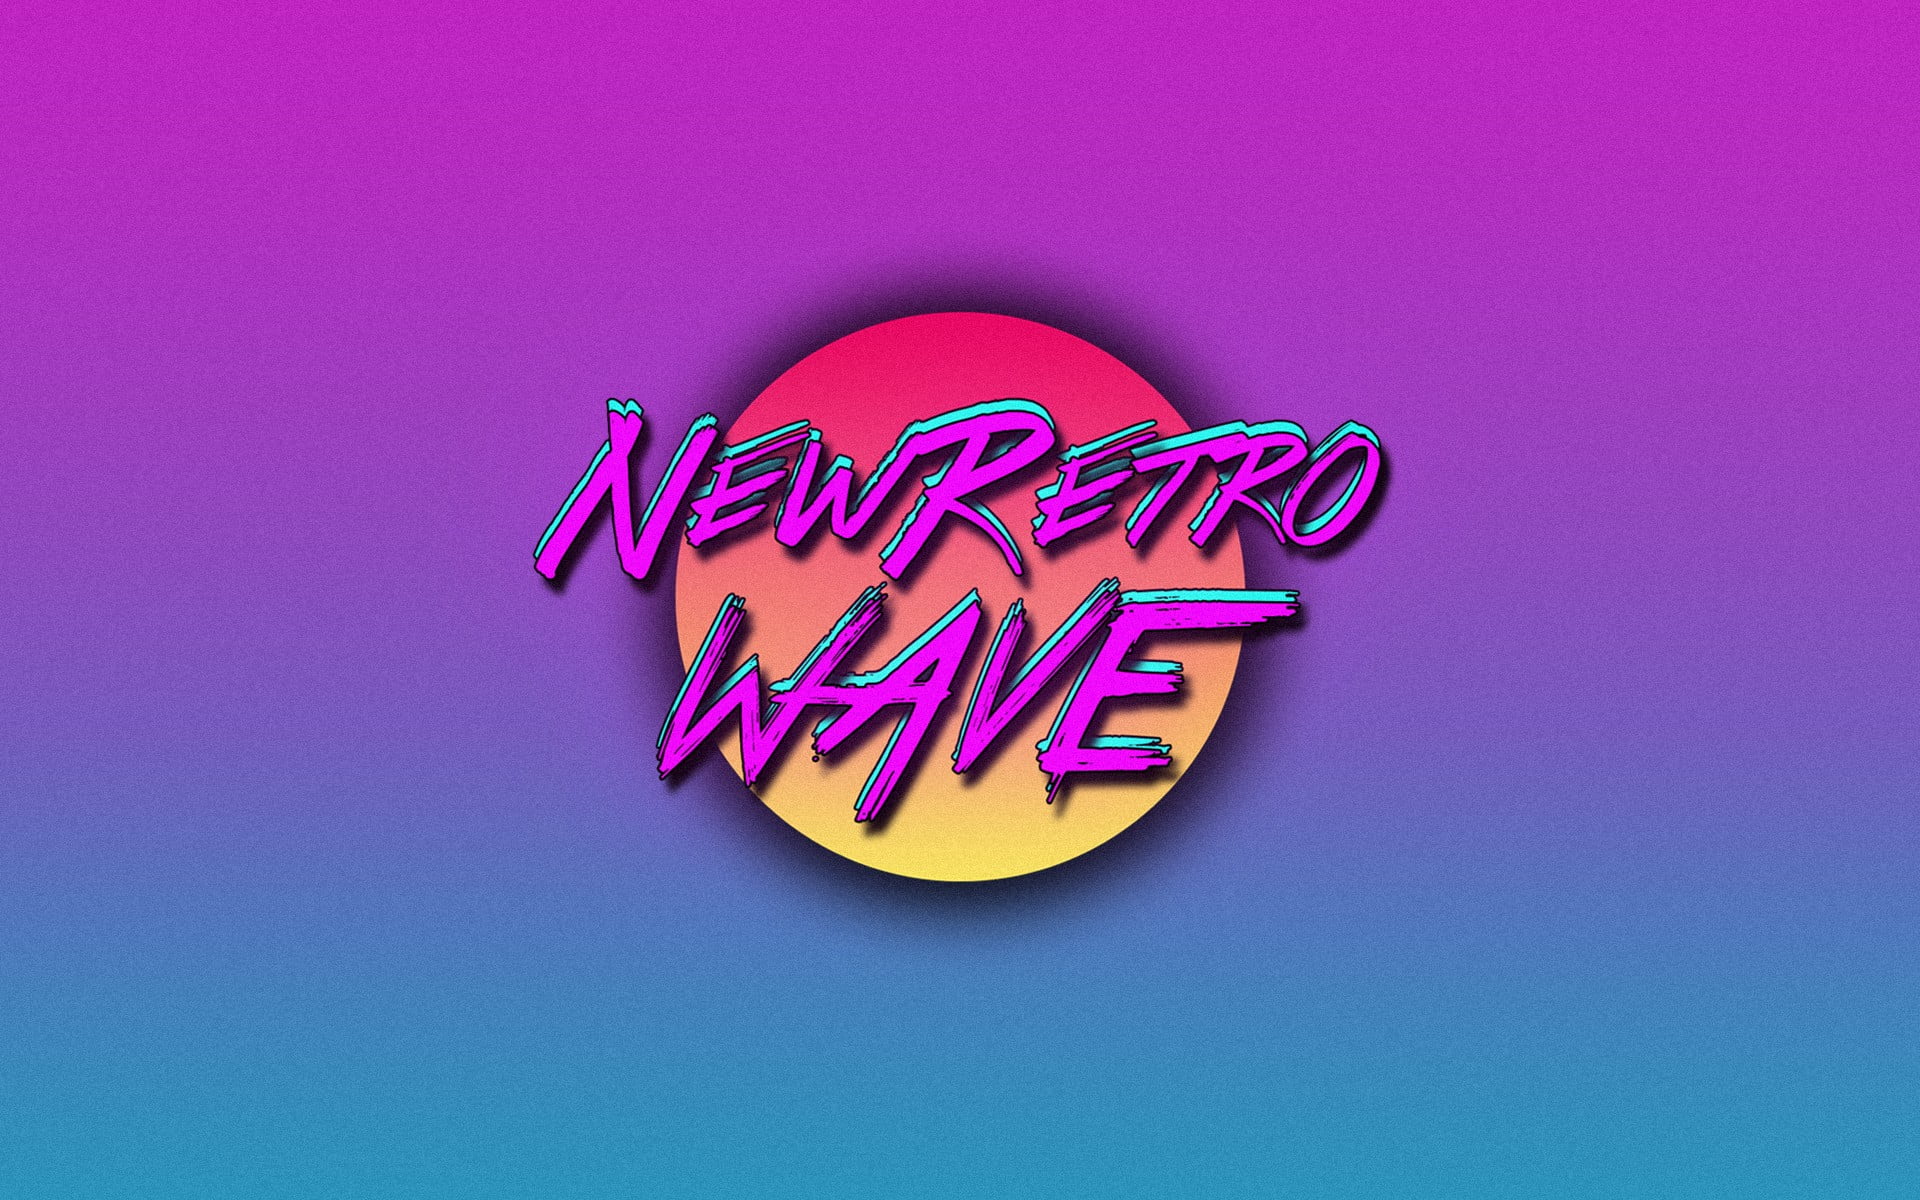 New Retro Wave logo, New Retro Wave, vintage, synthwave, neon